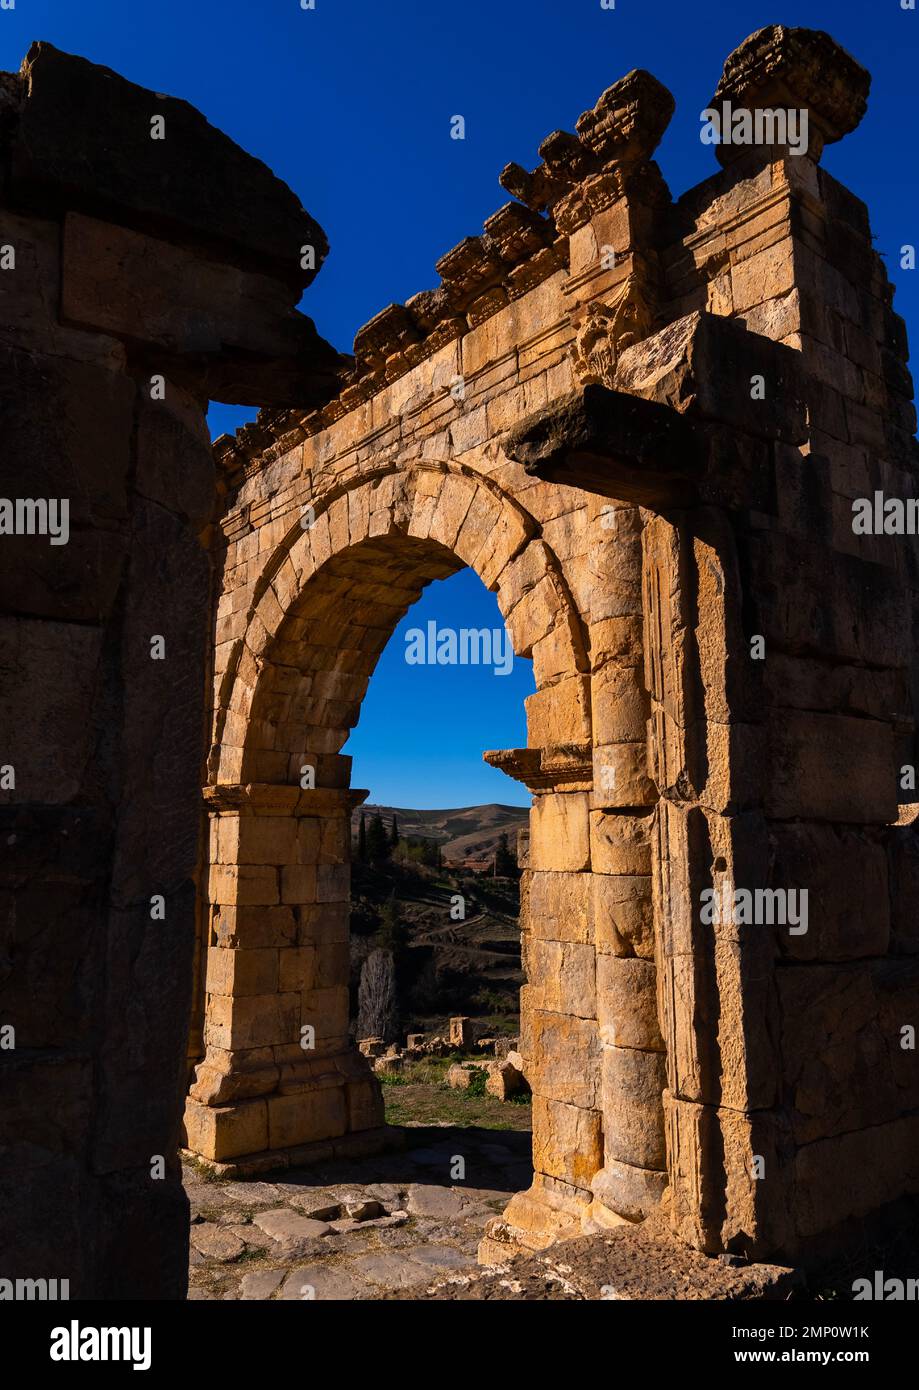 The Roman ruins of Djemila, North Africa, Djemila, Algeria Stock Photo